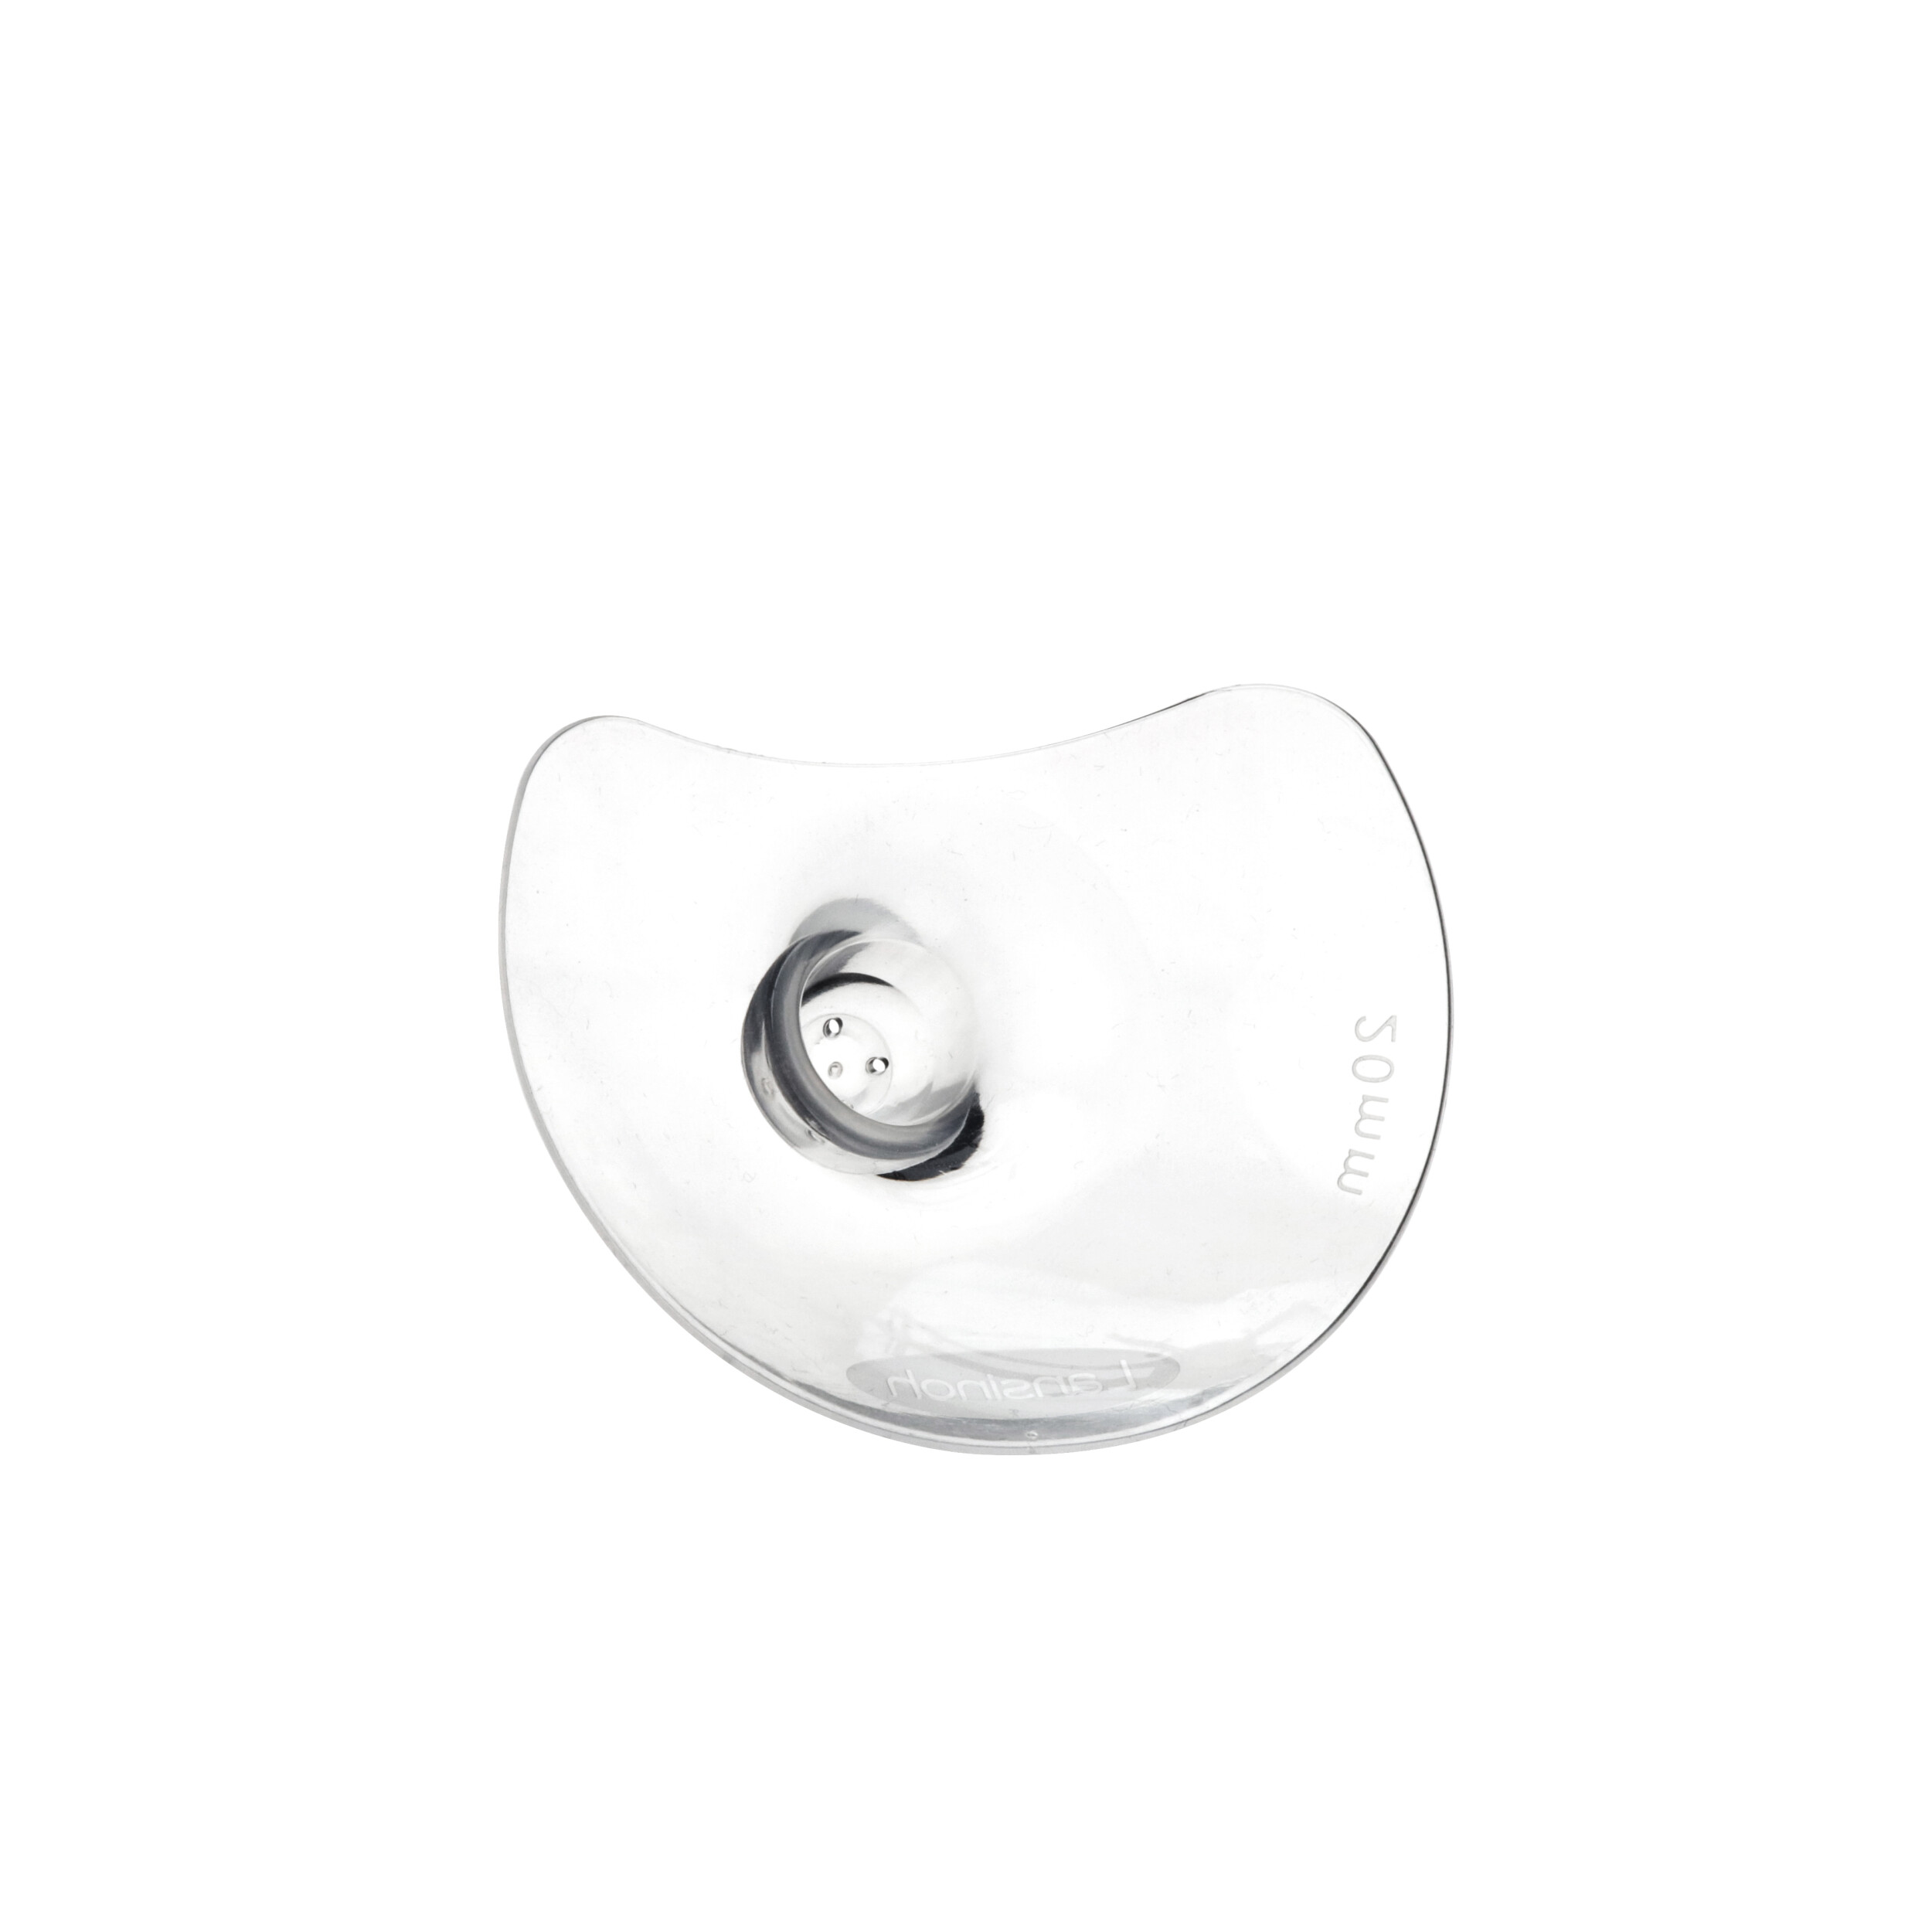 Lansinoh Contact Nipple Shields - 24 mm – Abytoys